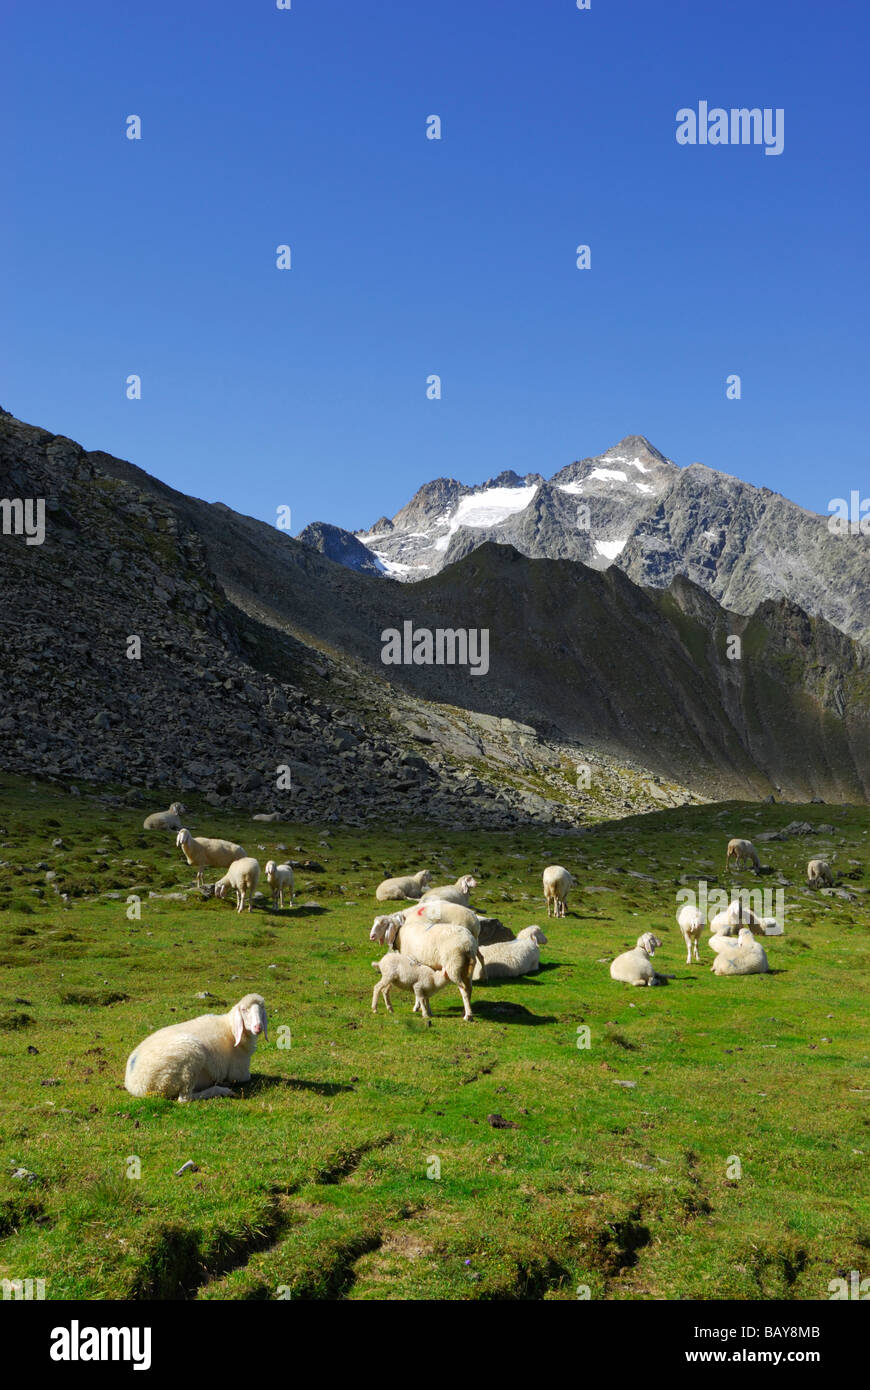 herd of sheep on green meadow, Lisenser Fernerkogel in background, Luesener Fernerkogel, Sellrain range, Stubaier Alpen range, S Stock Photo